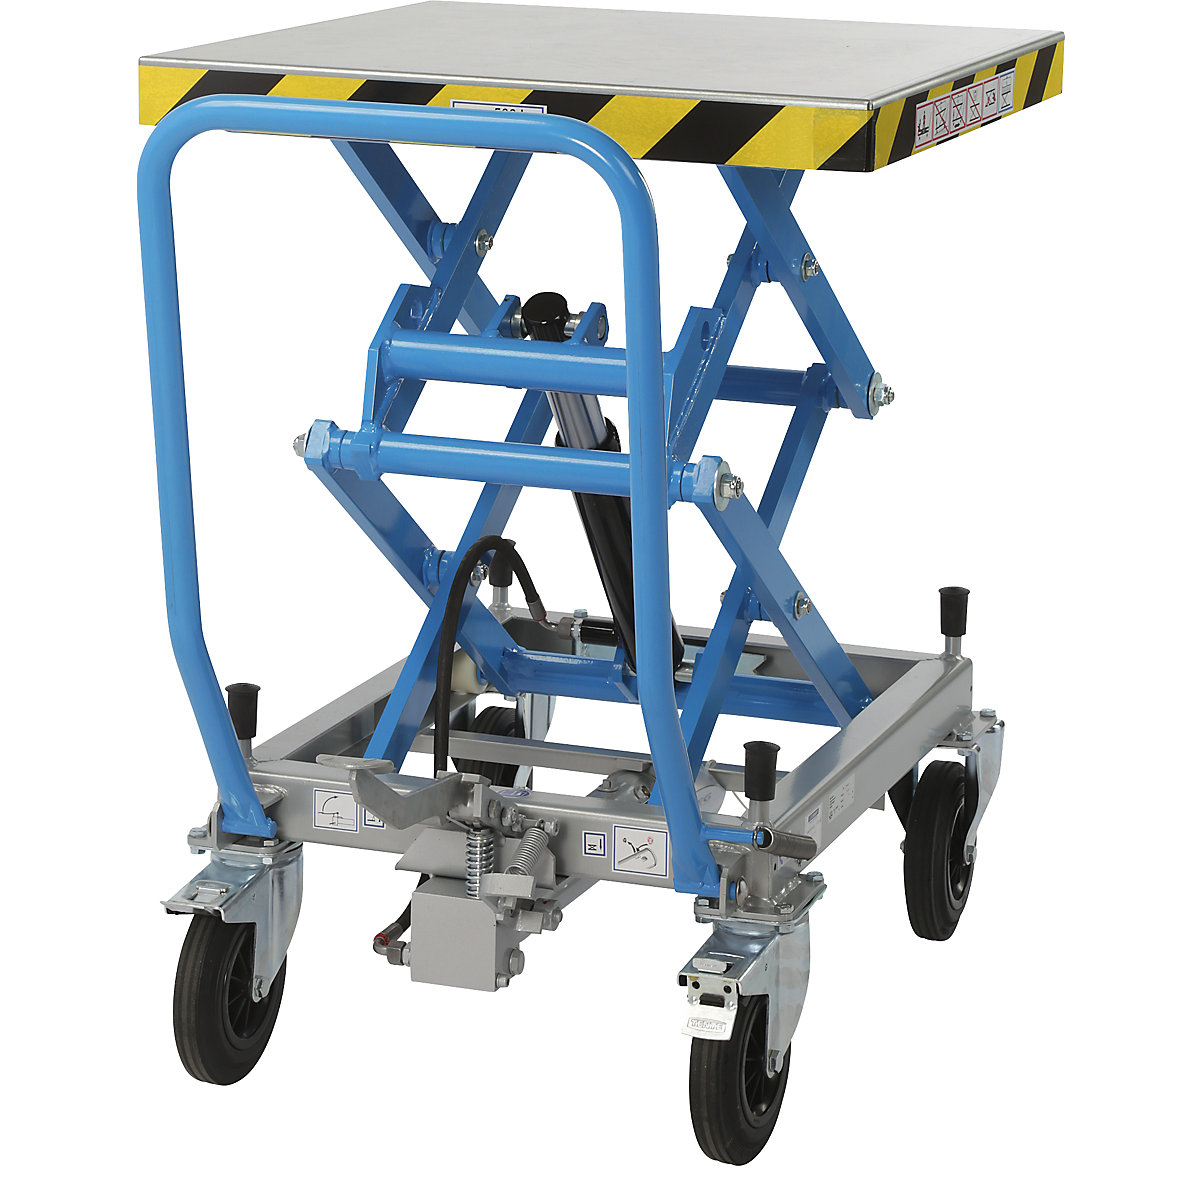 Double scissor lifting platform truck – eurokraft pro